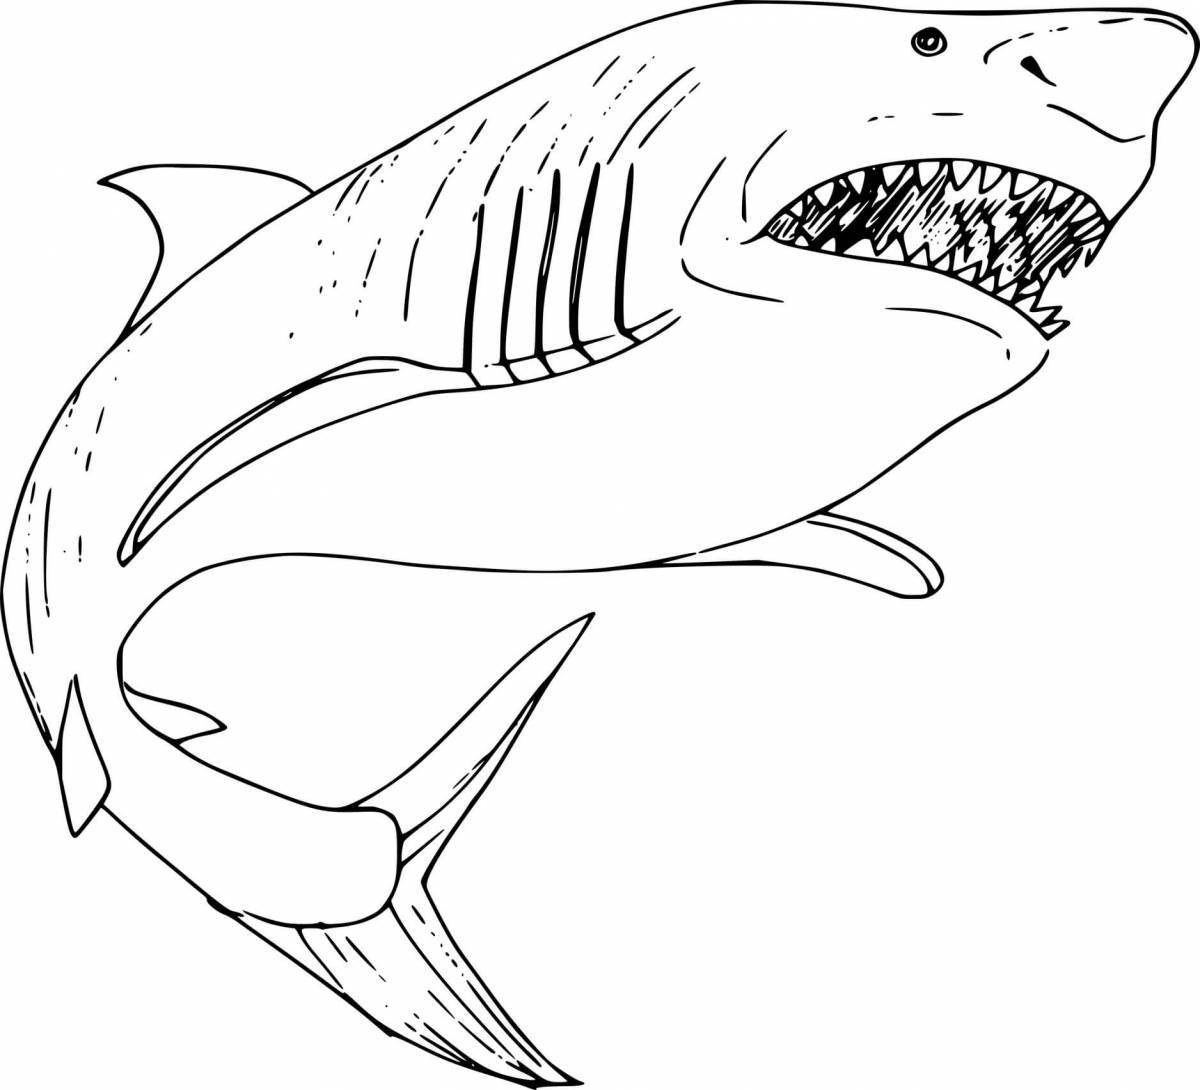 Милая акула-раскраска для детей